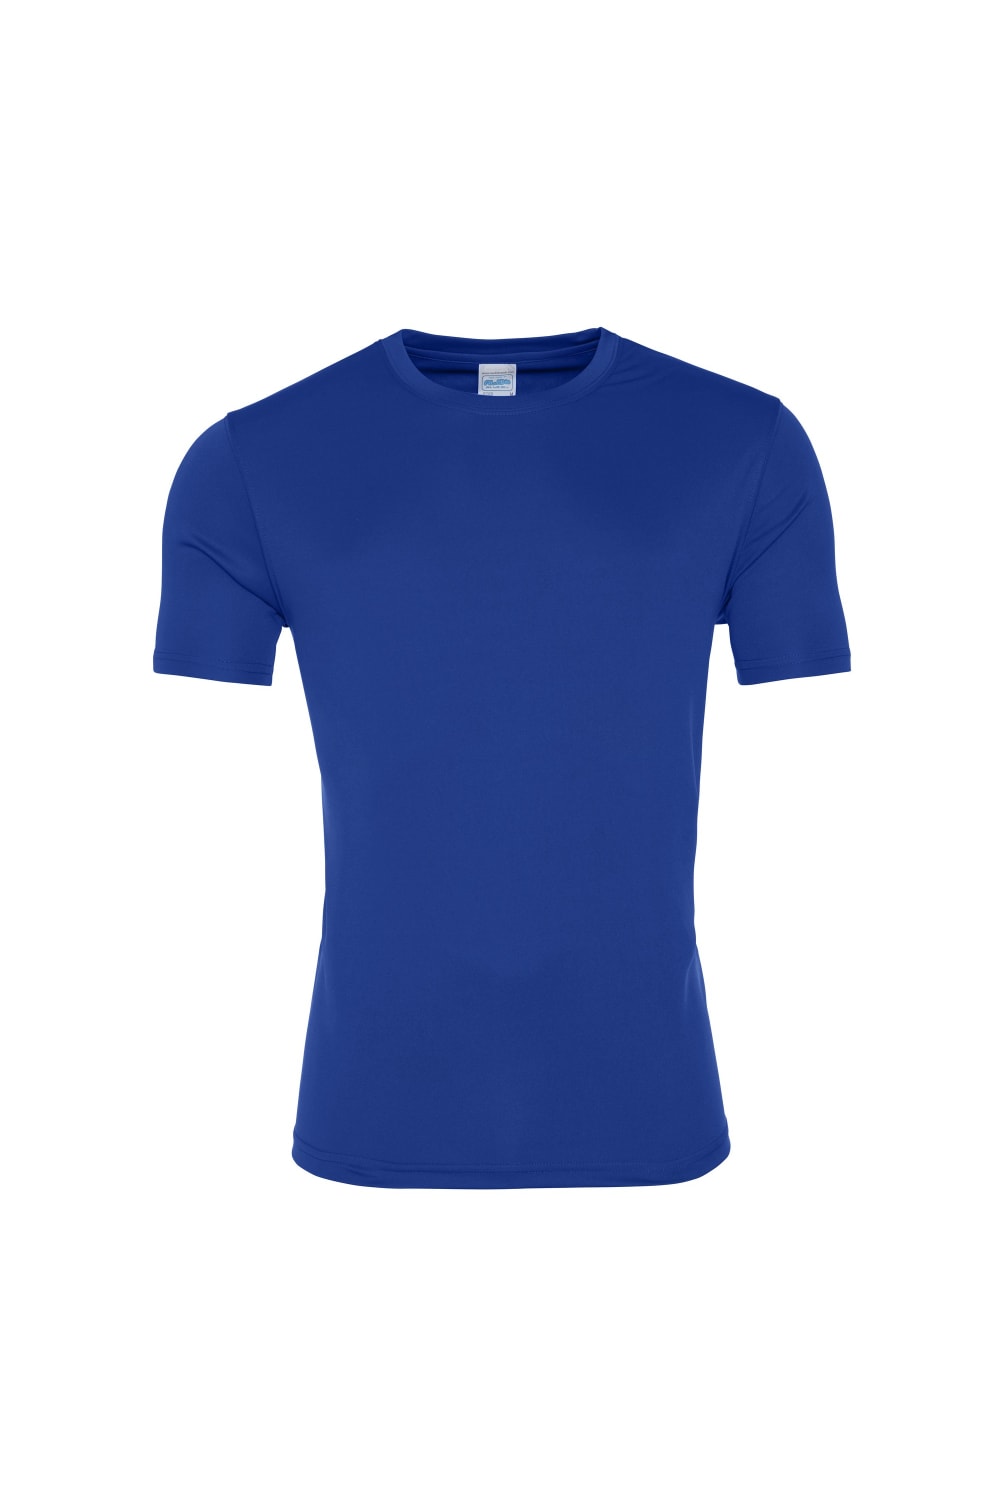 Mens Smooth Short Sleeve T-Shirt - Royal Blue